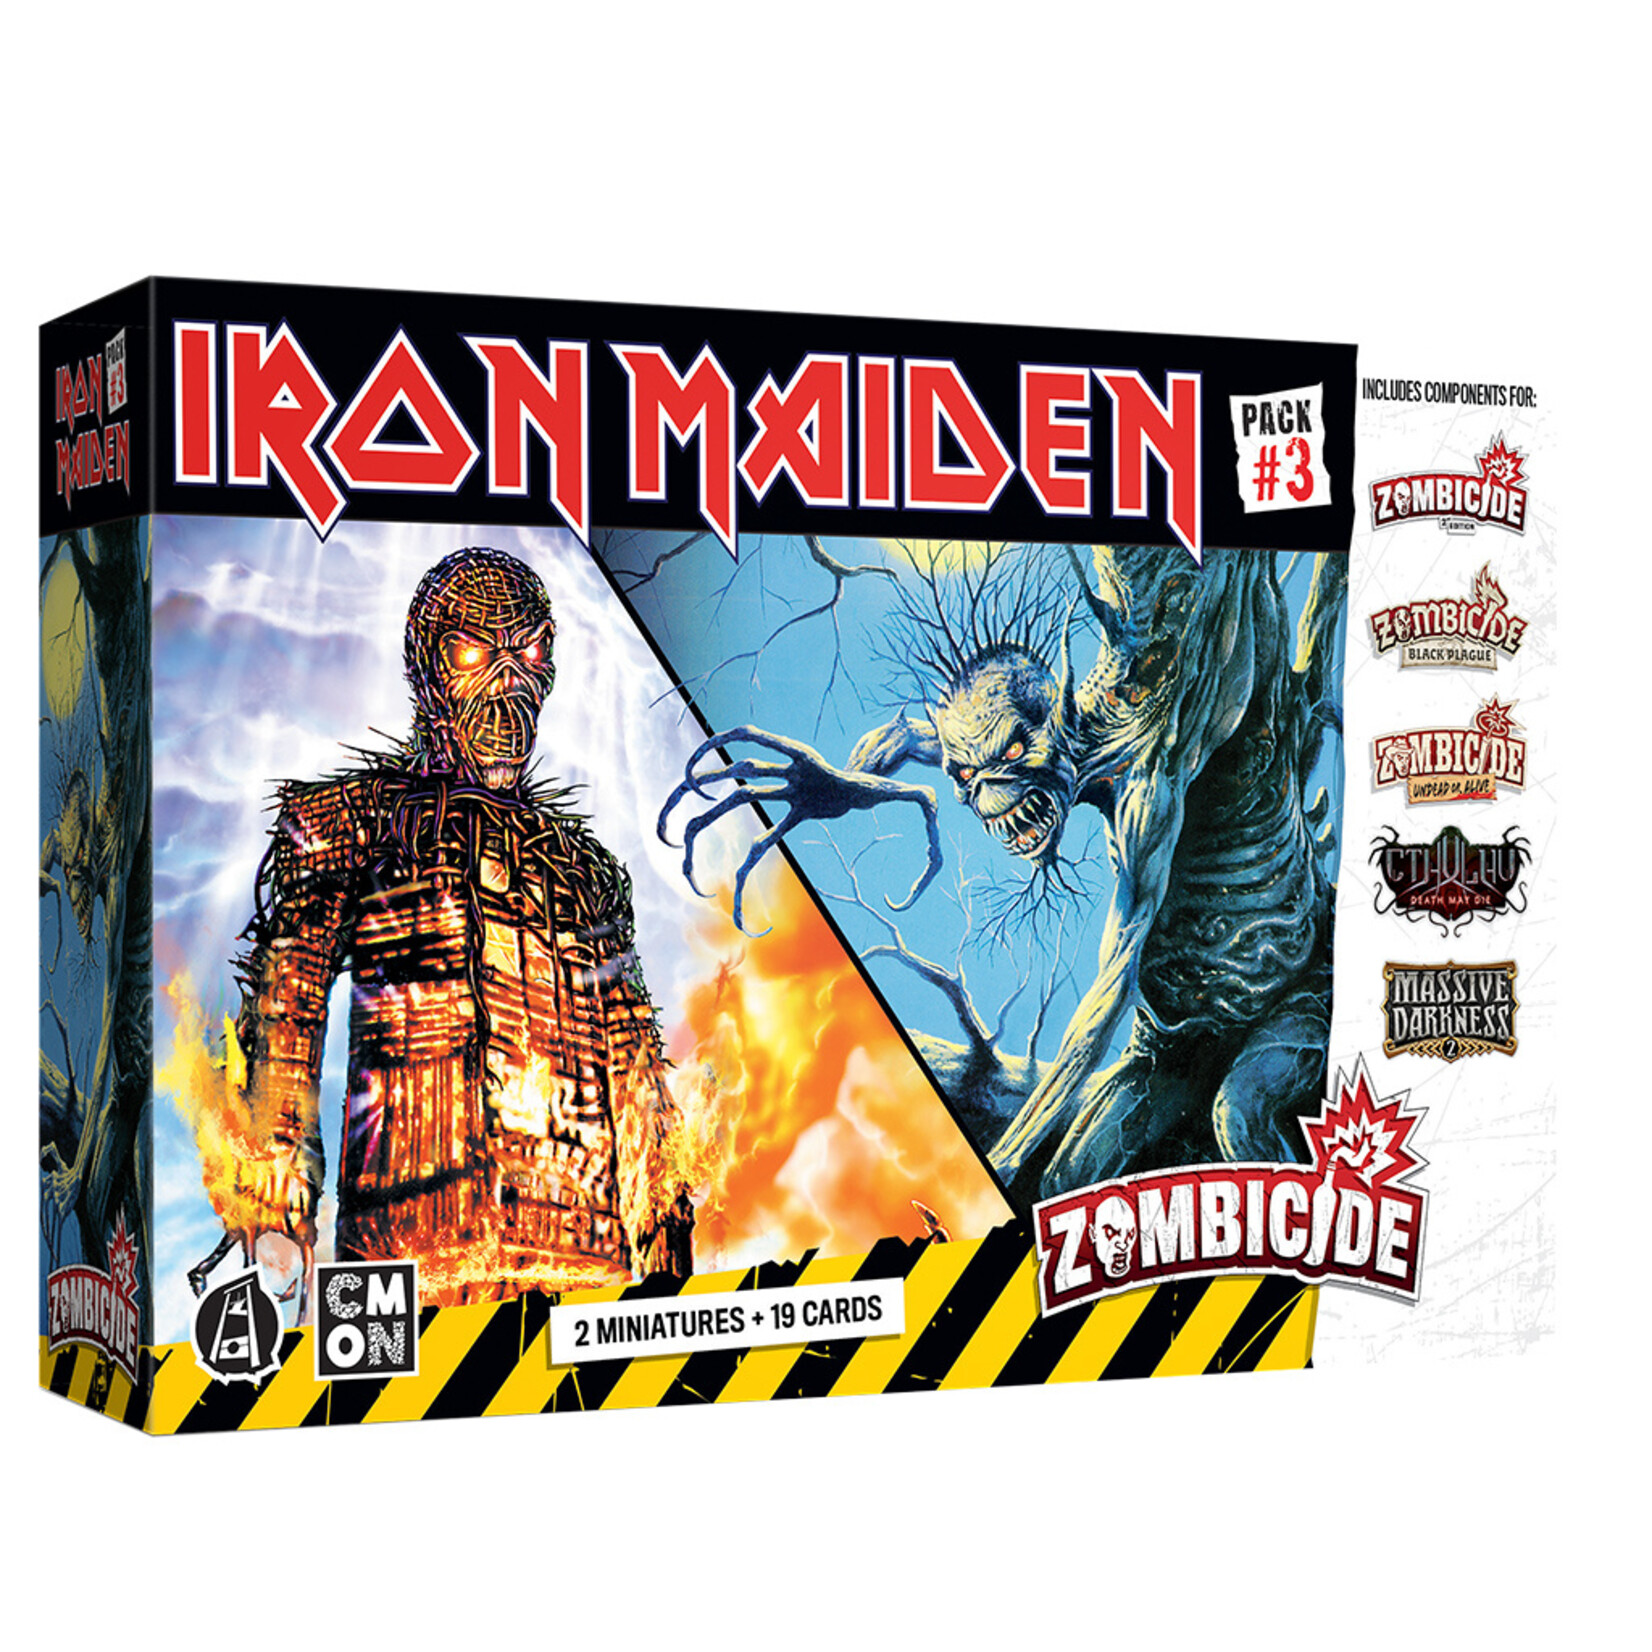 CMON Zombicide: Iron Maiden Pack #3